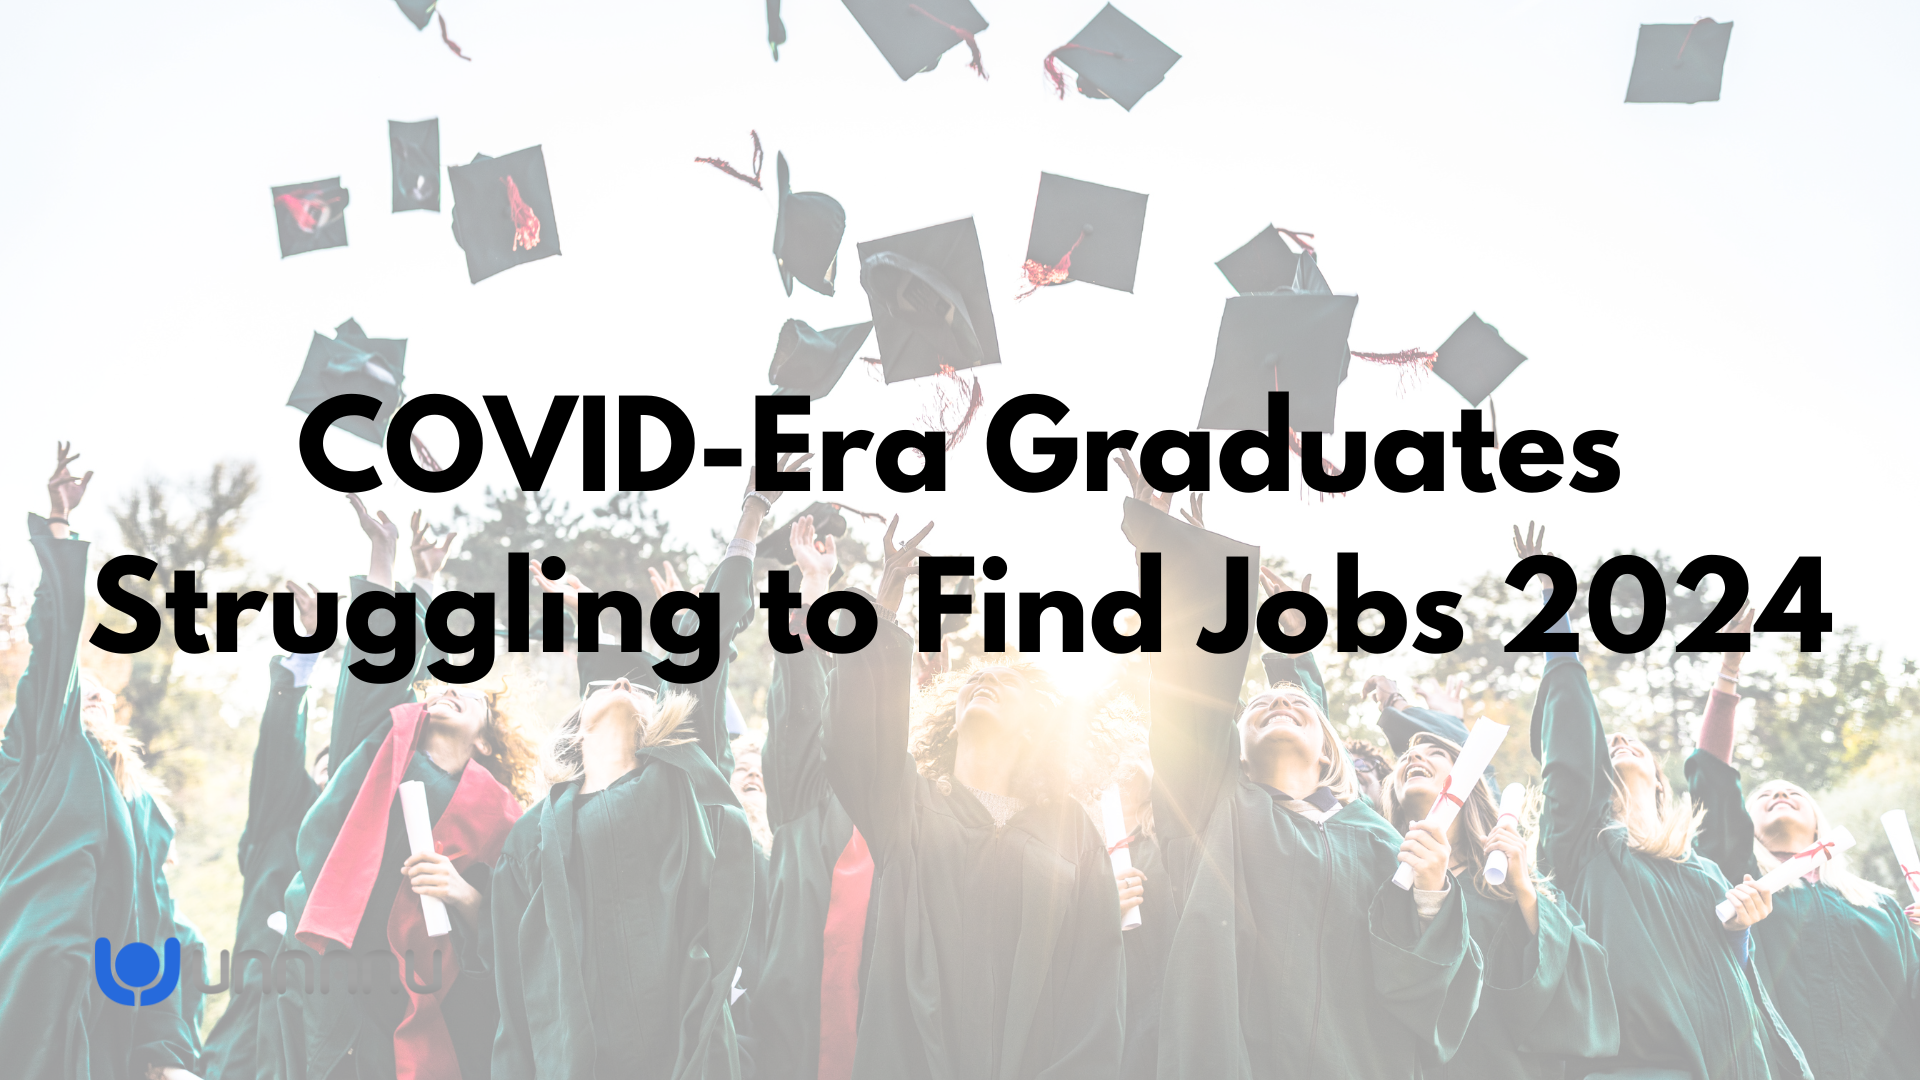 Tight Market Job market for COVID ERA College Graduates graduates even with *Record Low Unemployment